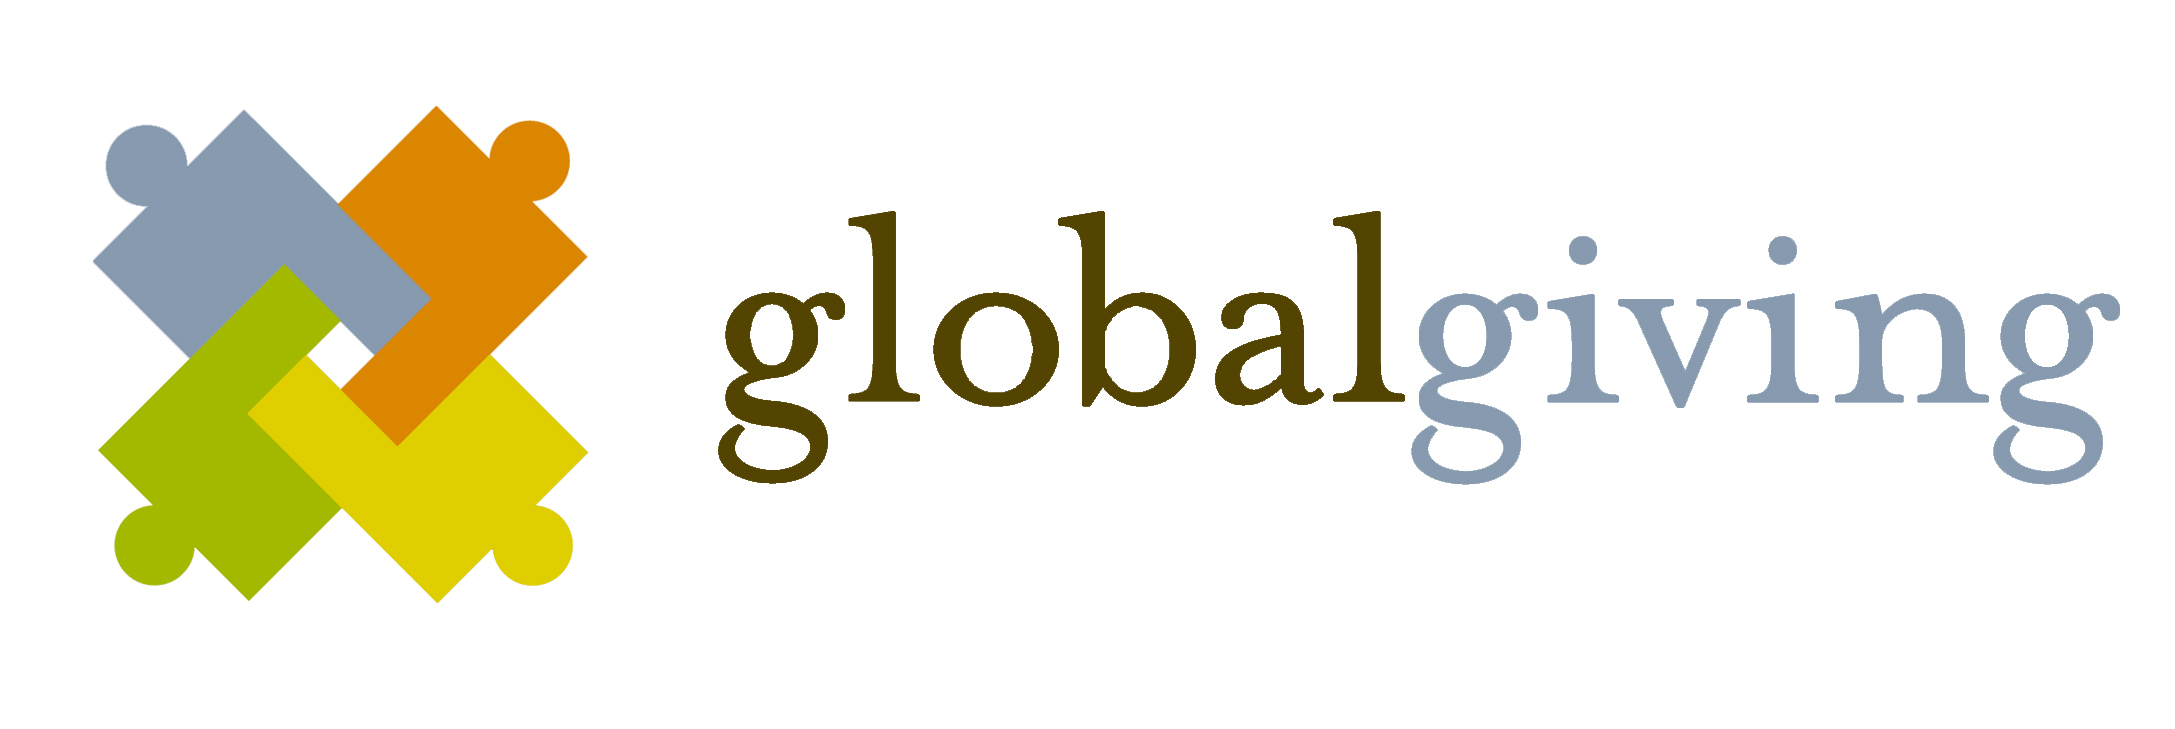 global giving banner